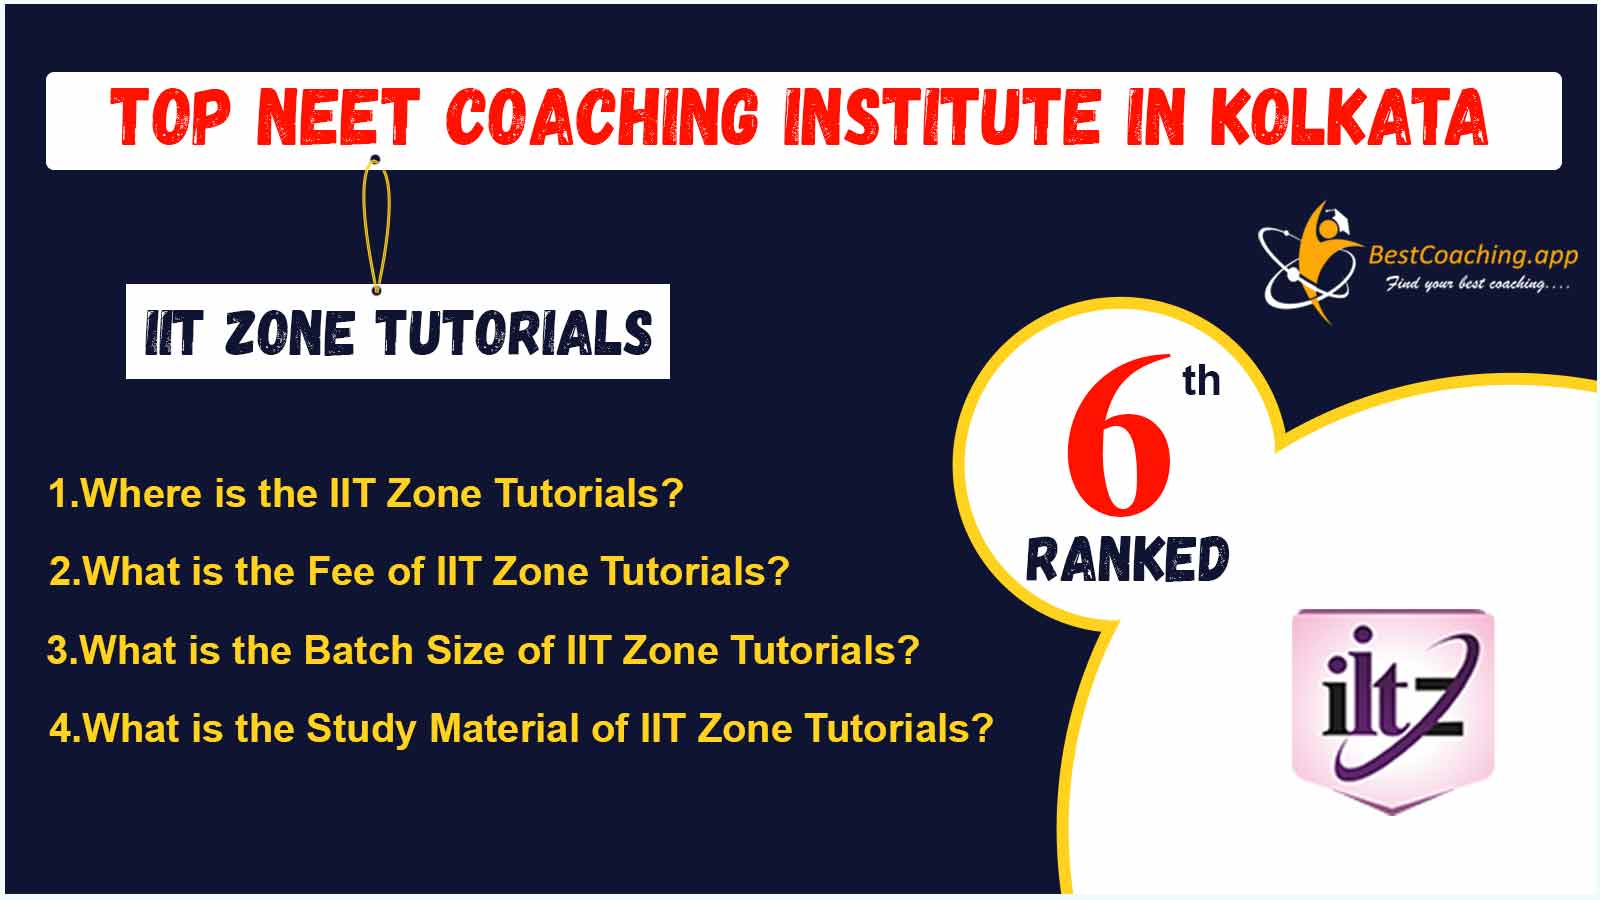 Best NEET Coaching in Kolkata